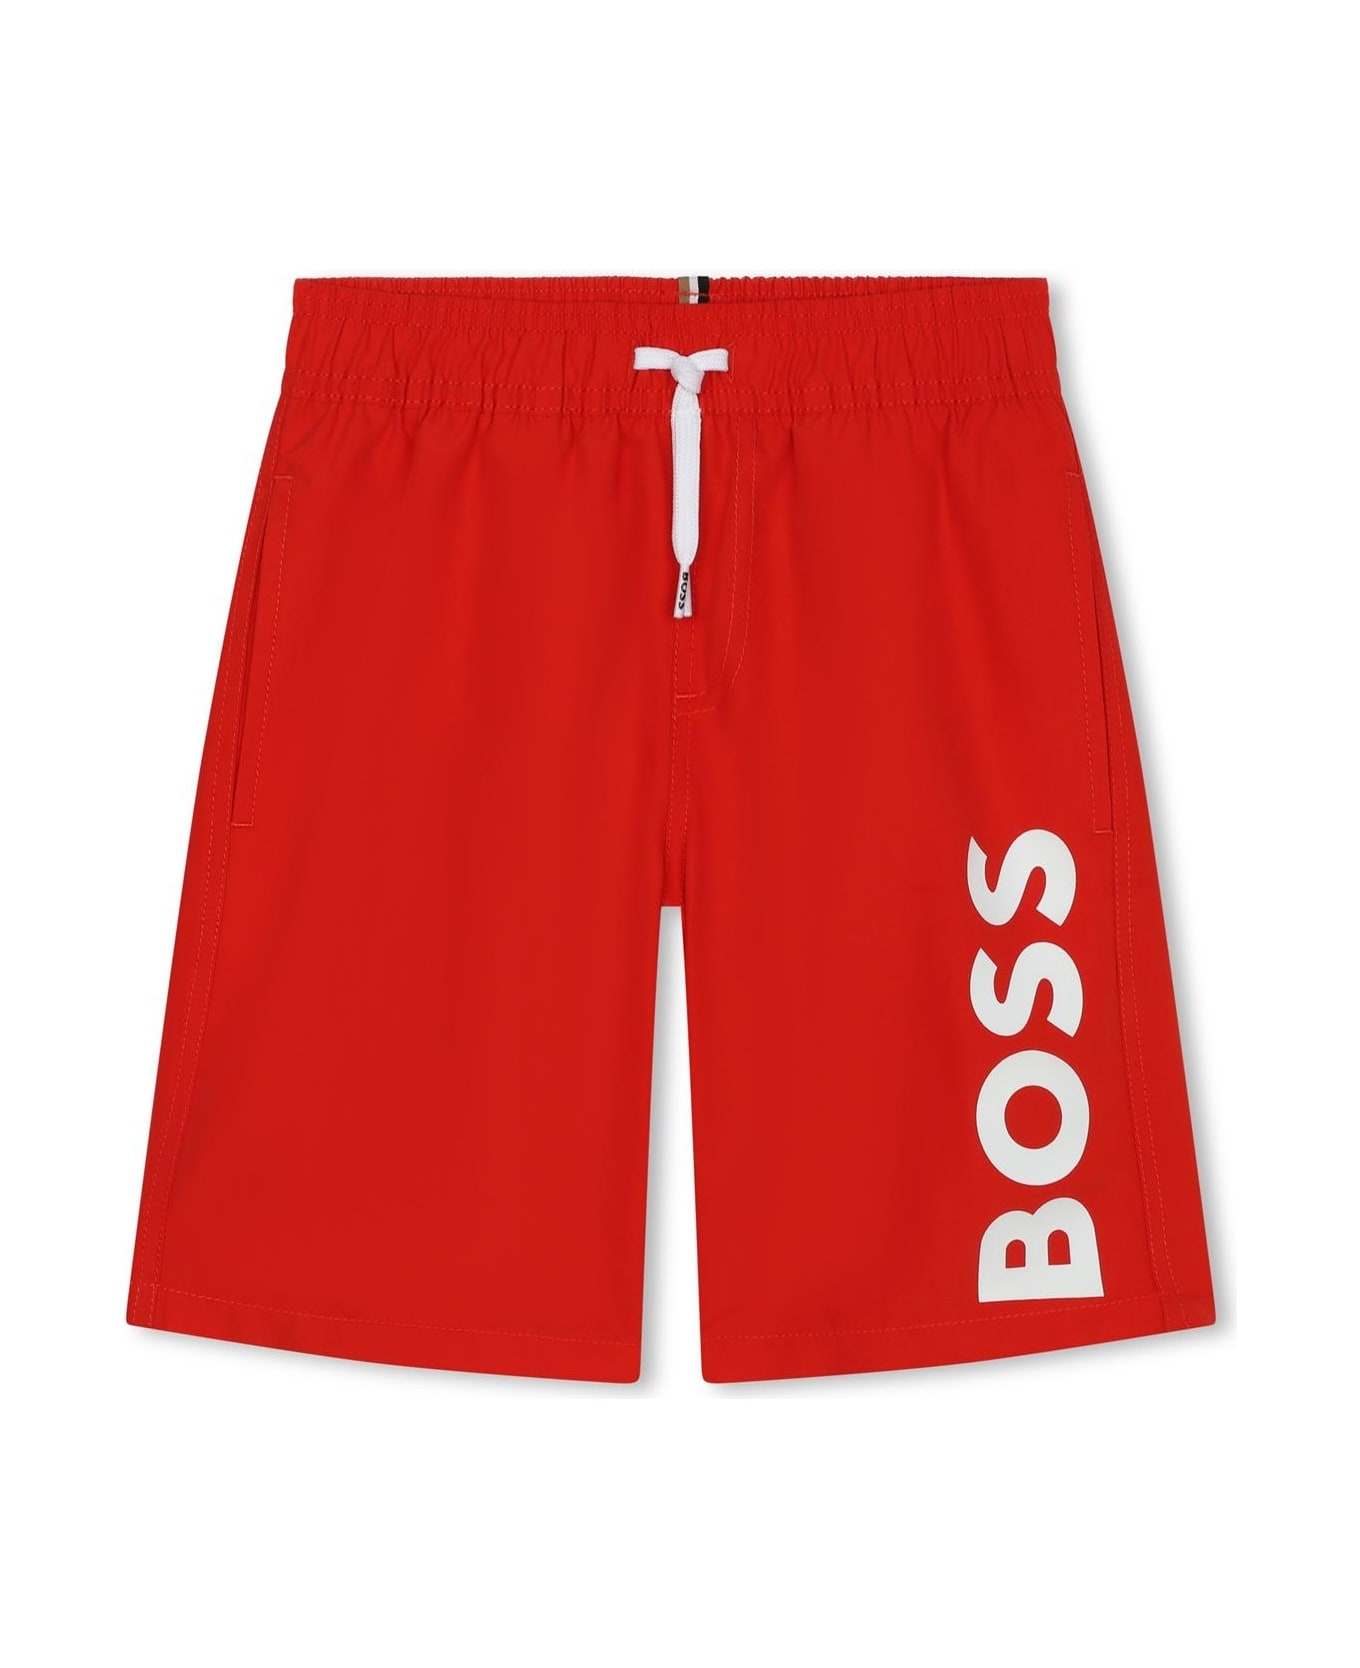 Hugo Boss Printed Swimsuit - Red 水着